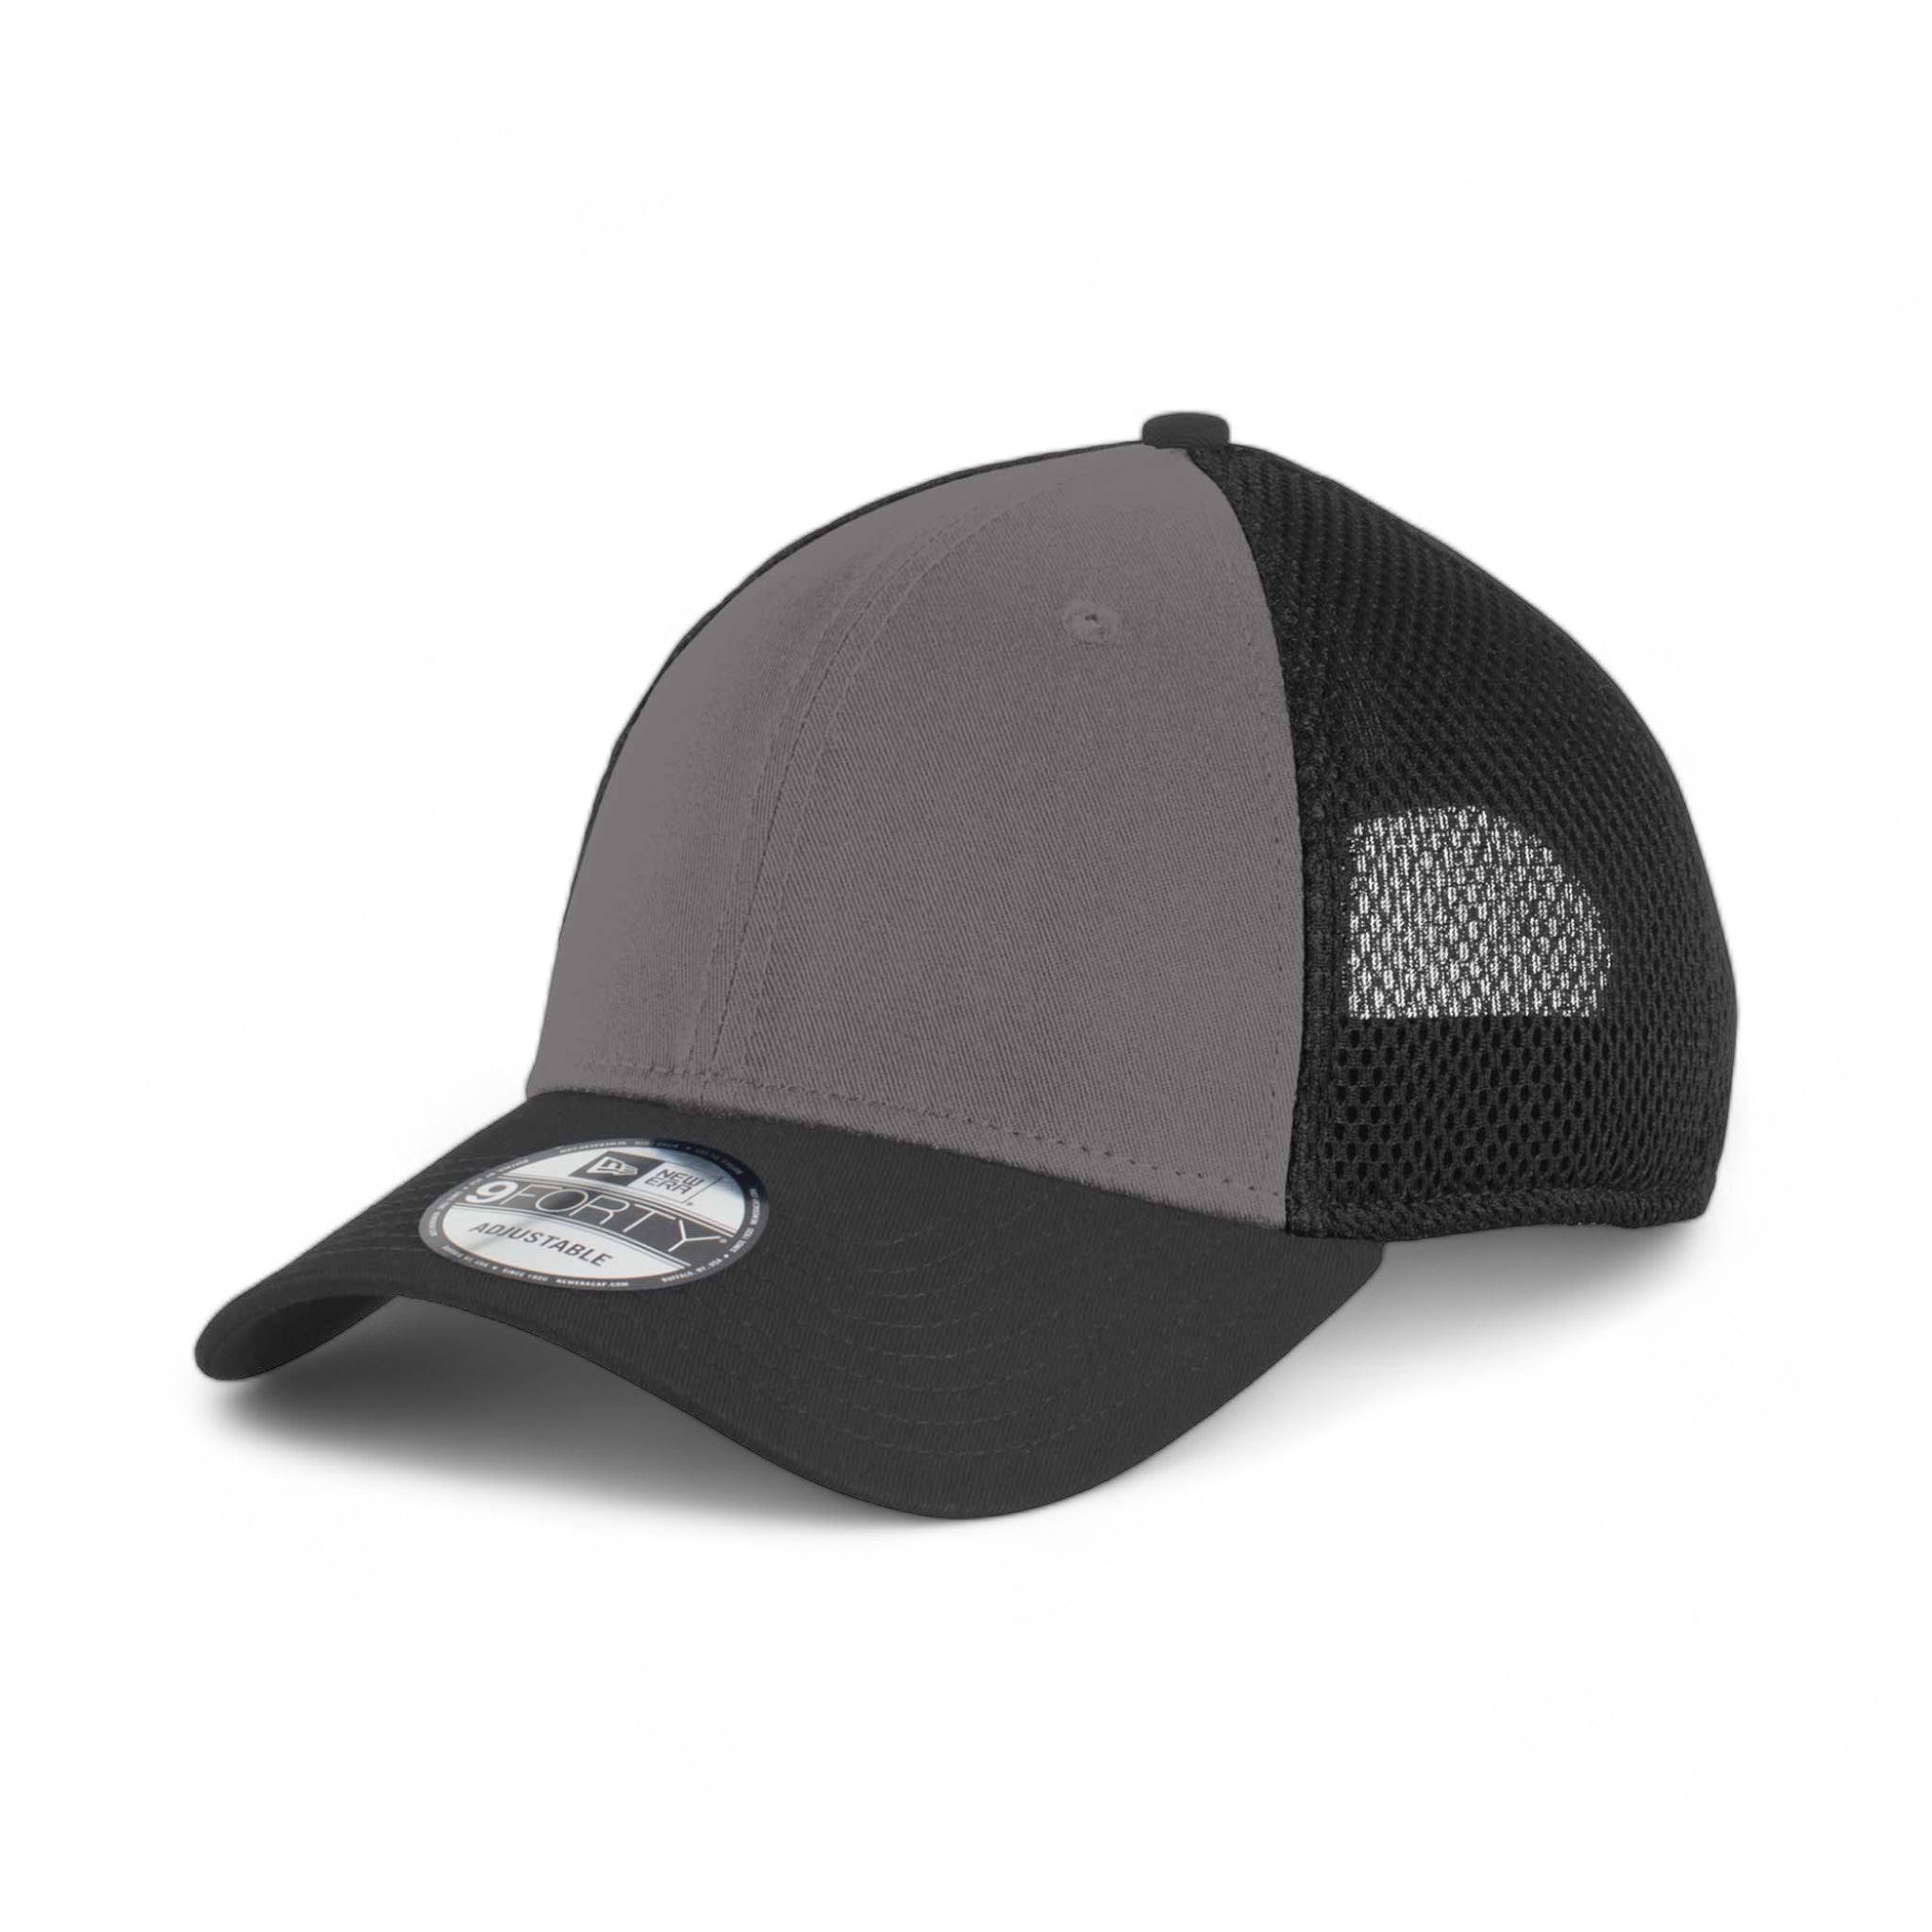 Side view of New Era NE204 custom hat in charcoal and black